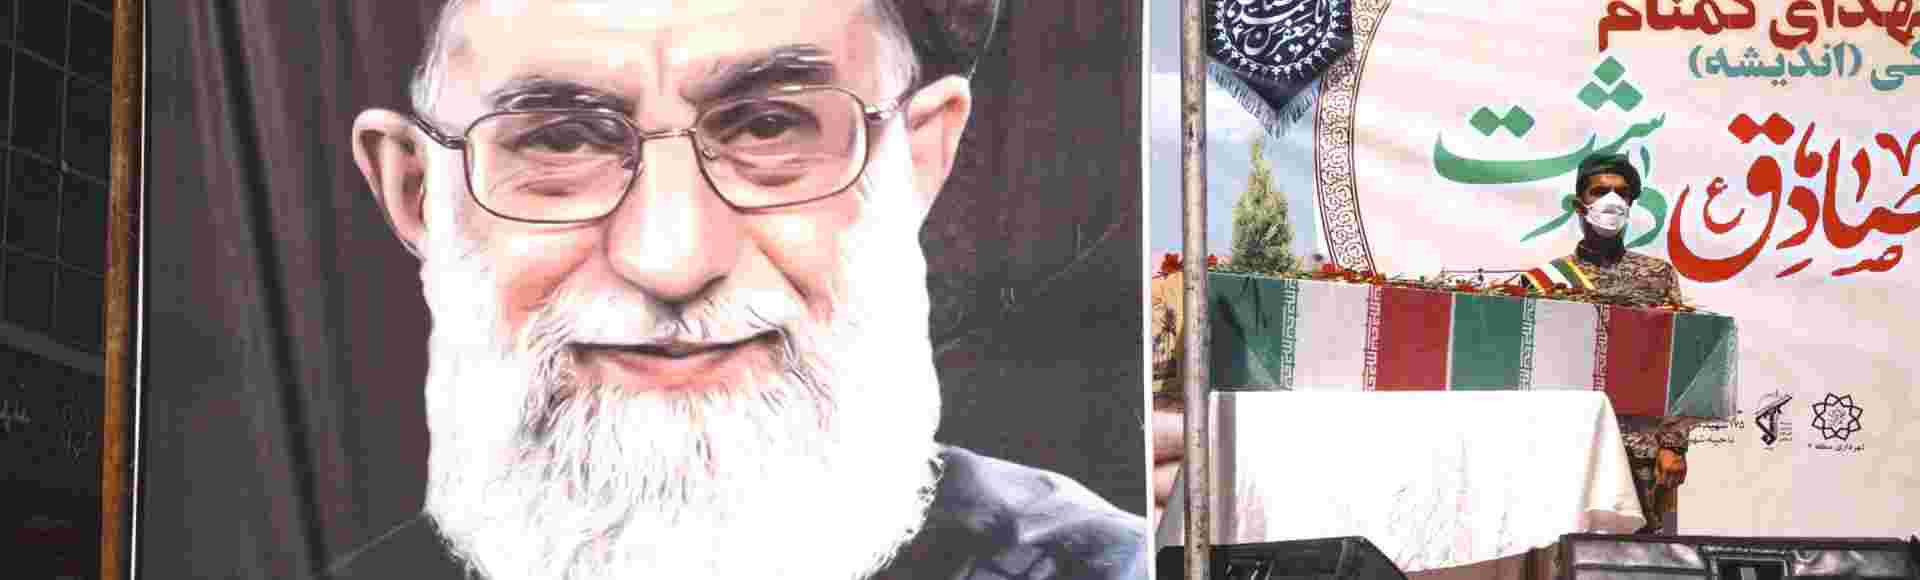 Members of the Islamic Revolutionary Guard Corps (IRGC) stand next to a poster of Ayatollah Khamenei.